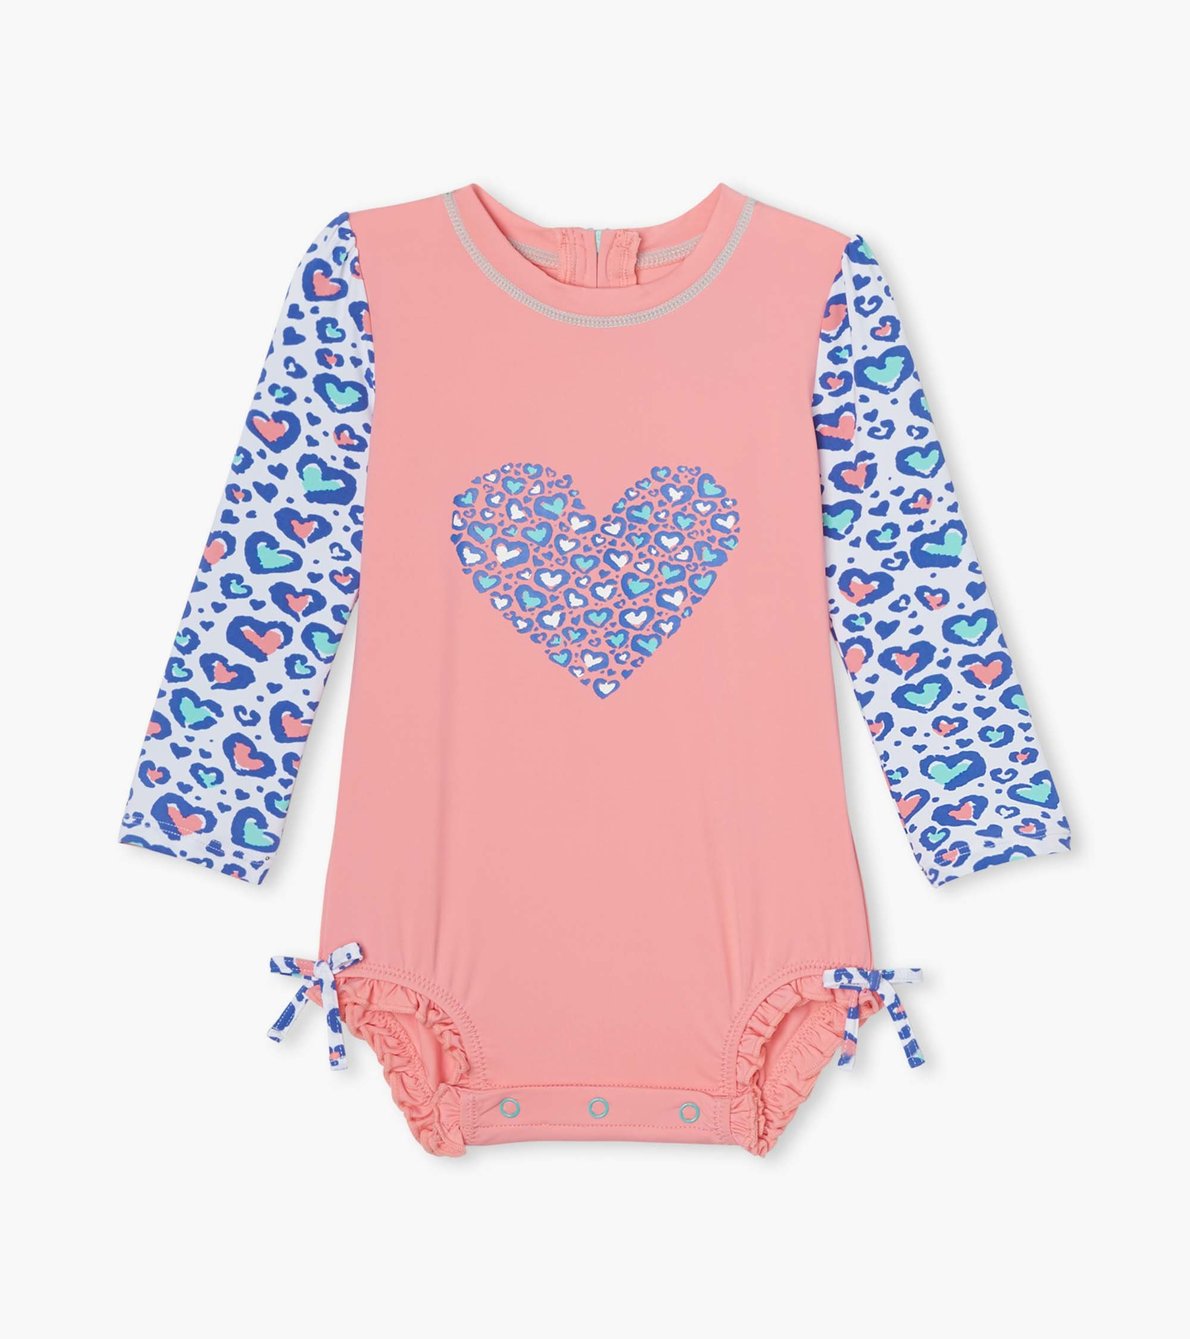 View larger image of Cheetah Hearts Baby Rashguard Swimsuit